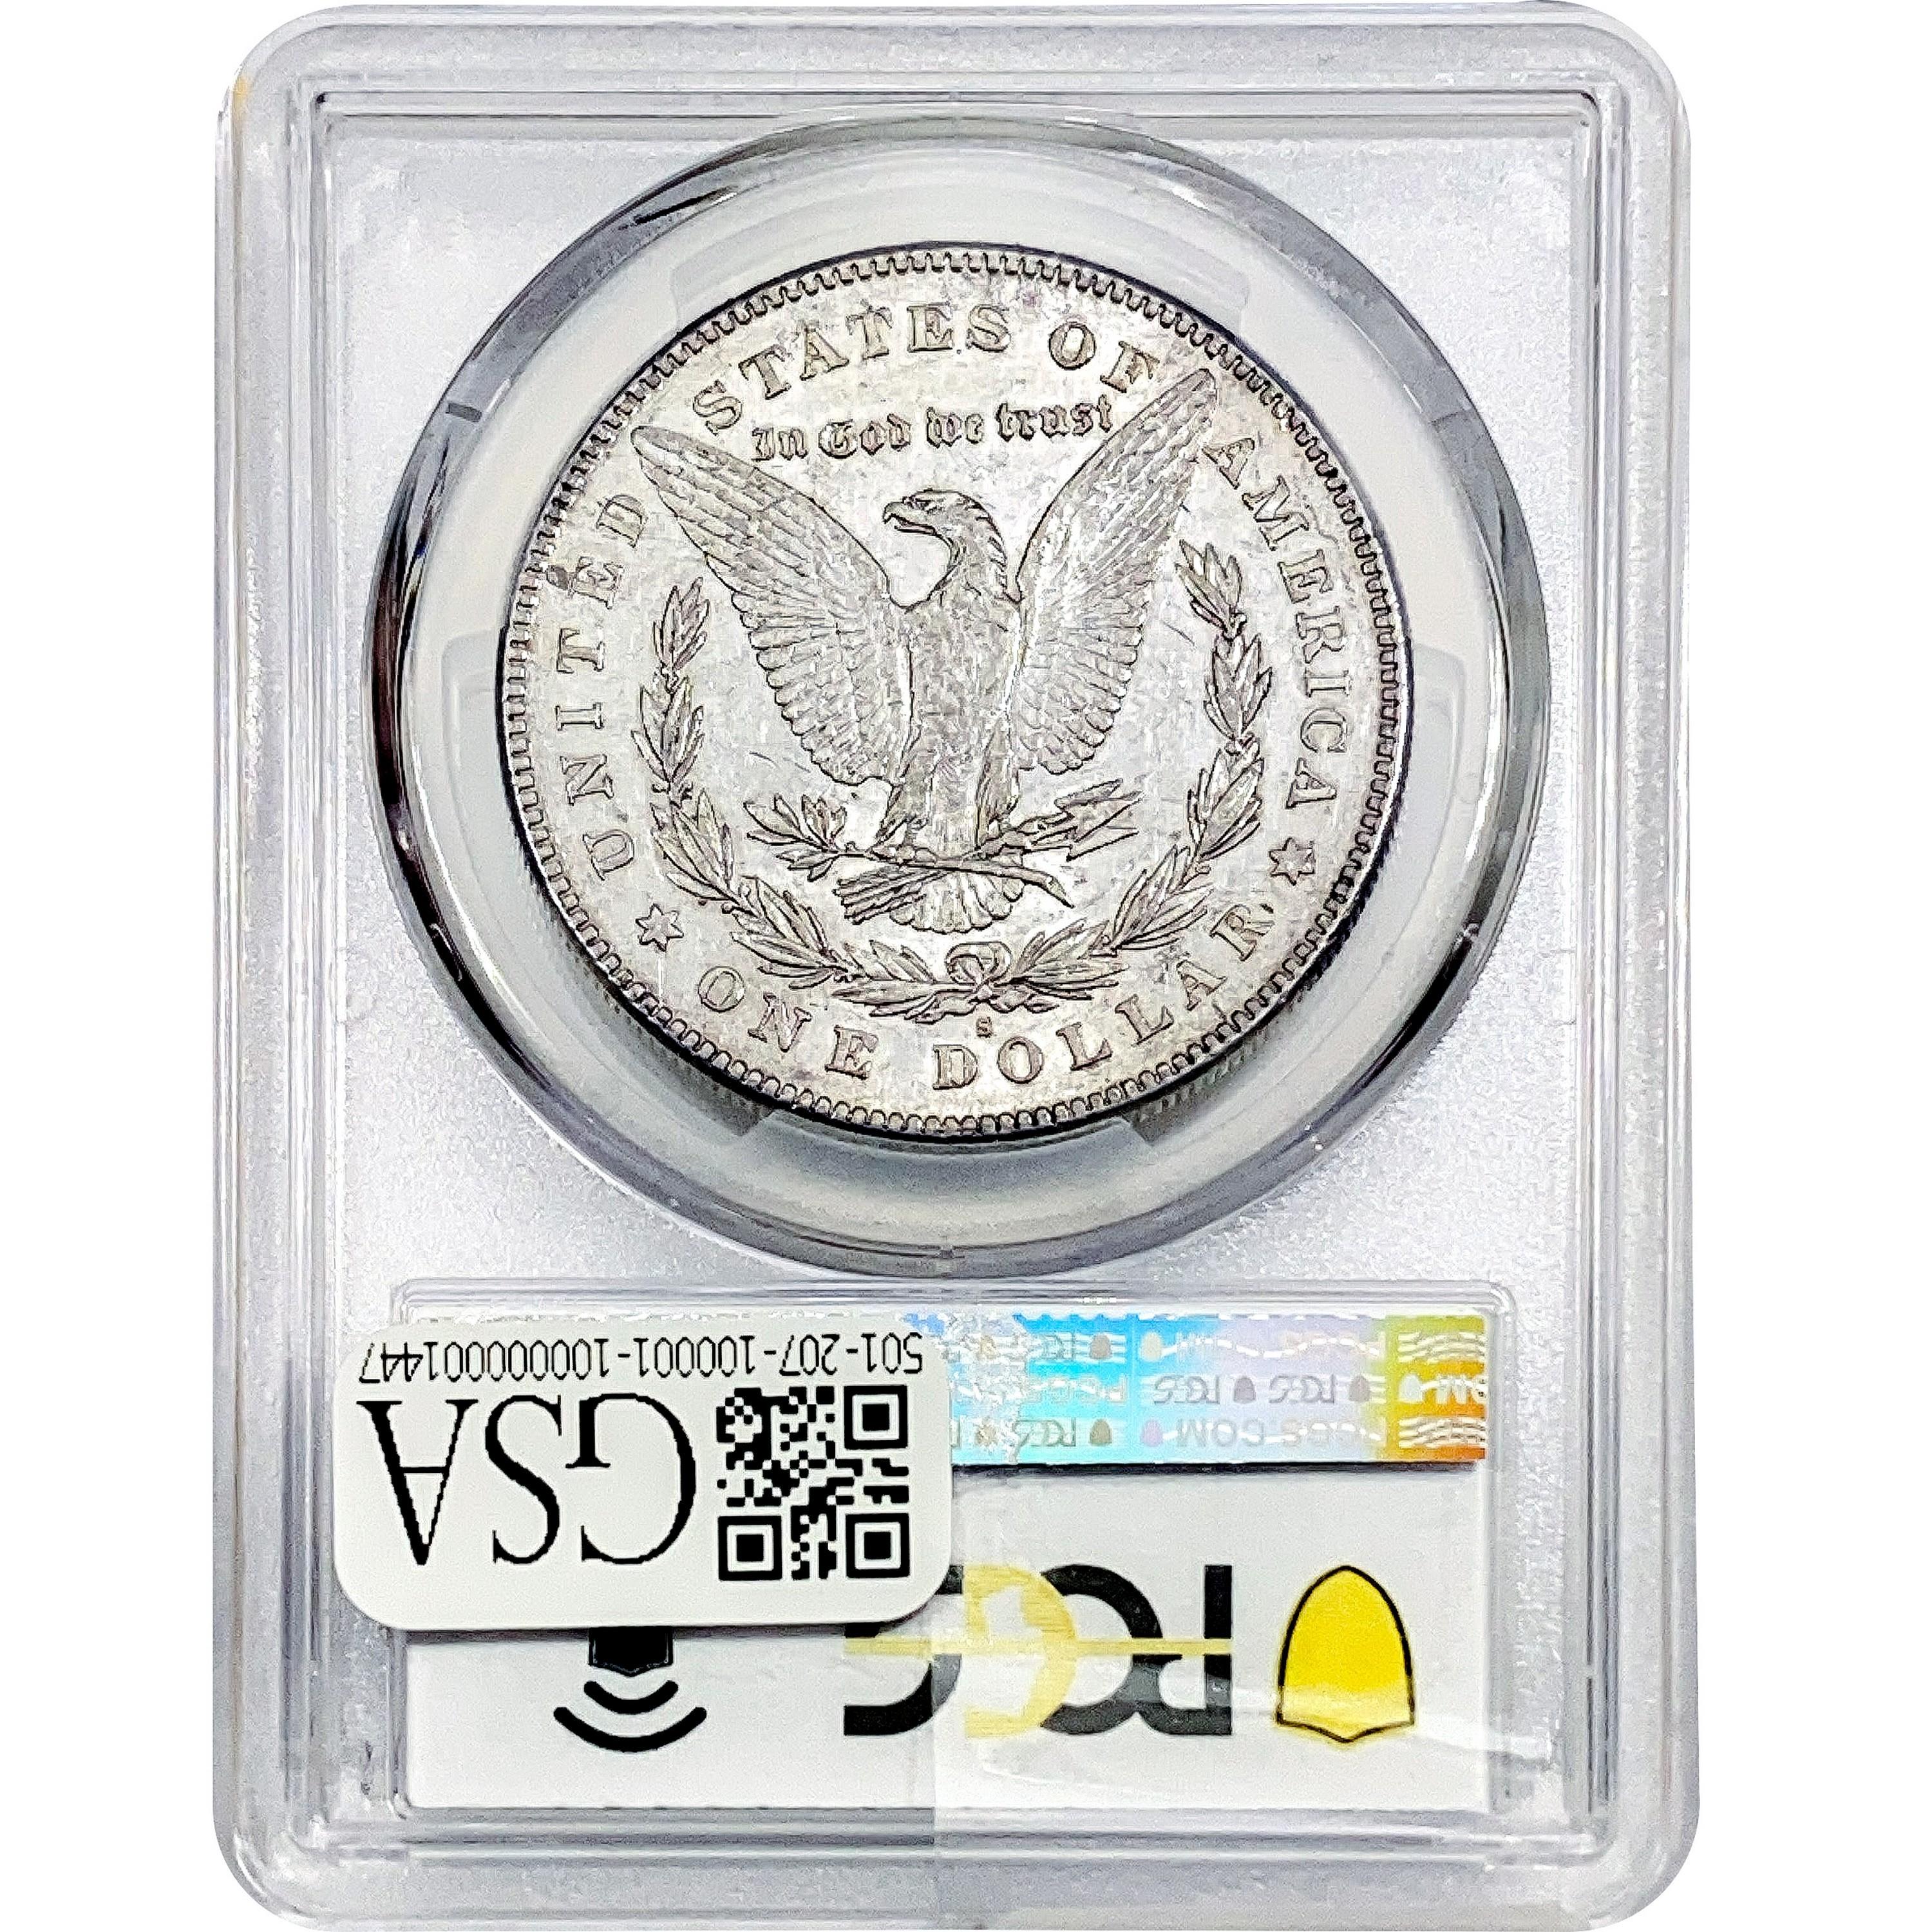 1879-S Morgan Silver Dollar PCGS AU55 REV 78